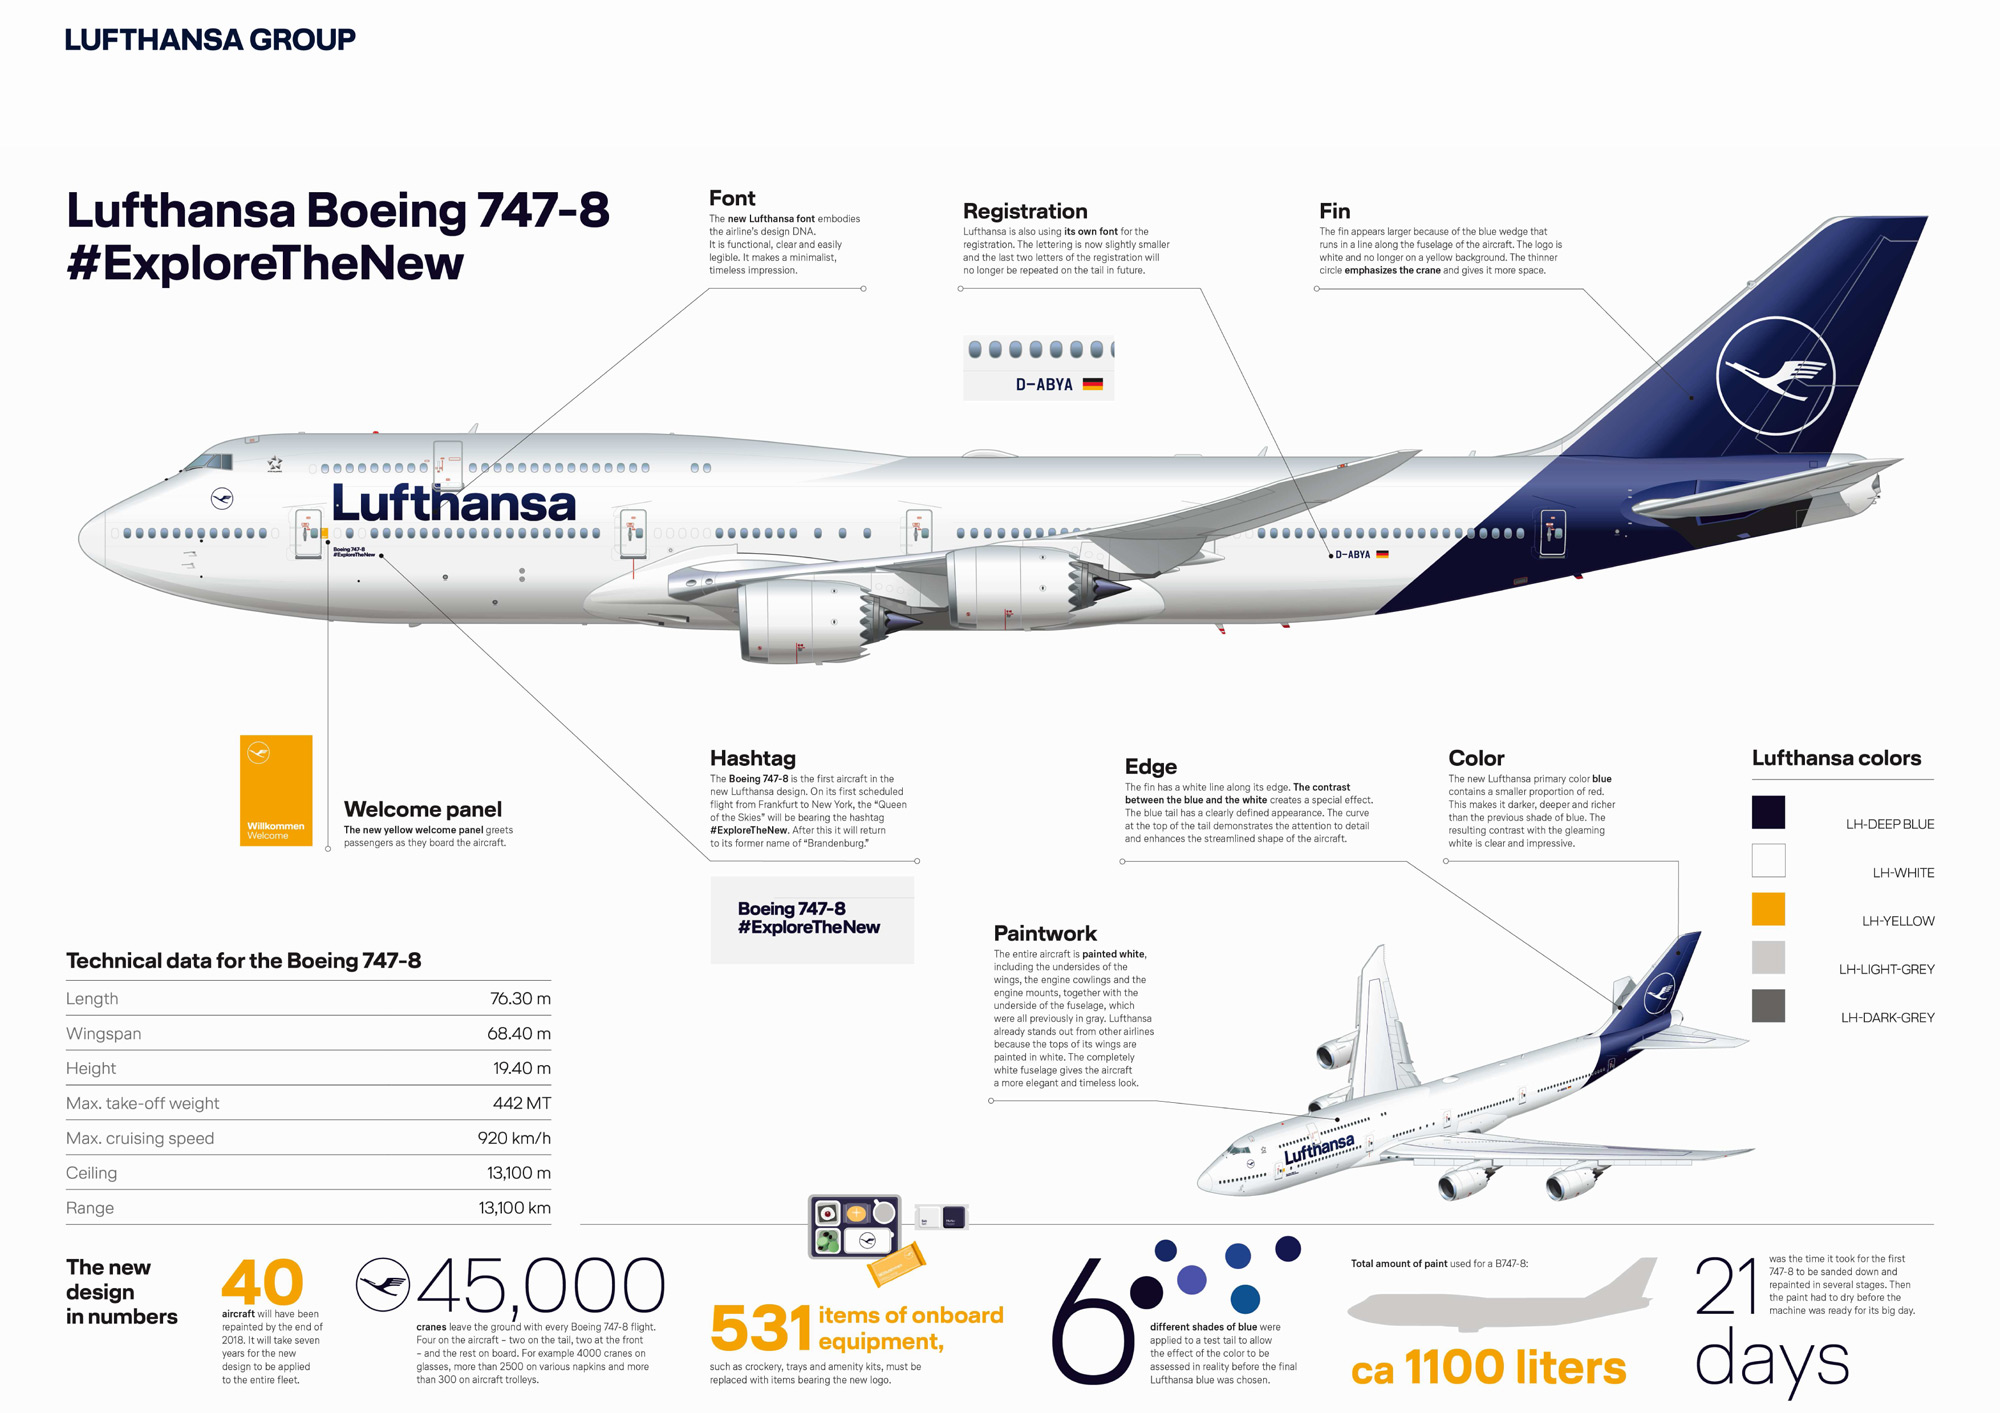 Lufthansa Explanation of Livery Design